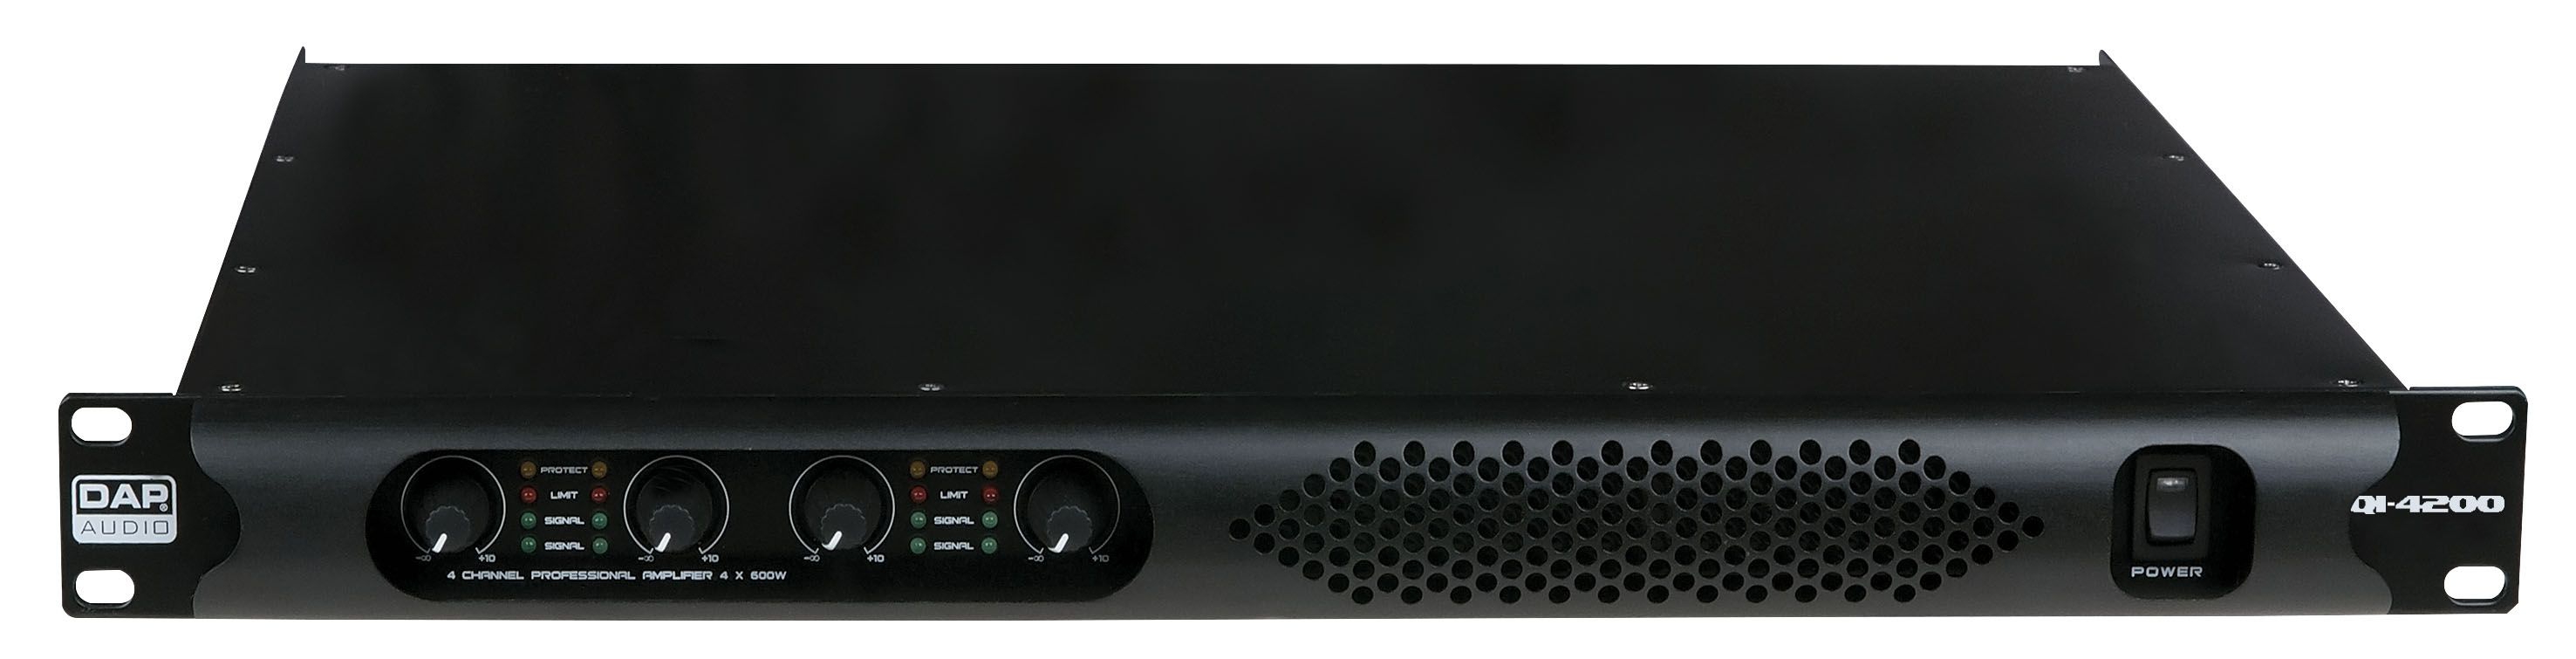 DAP-Audio Qi-4200 4 Channel installation amp 4x200